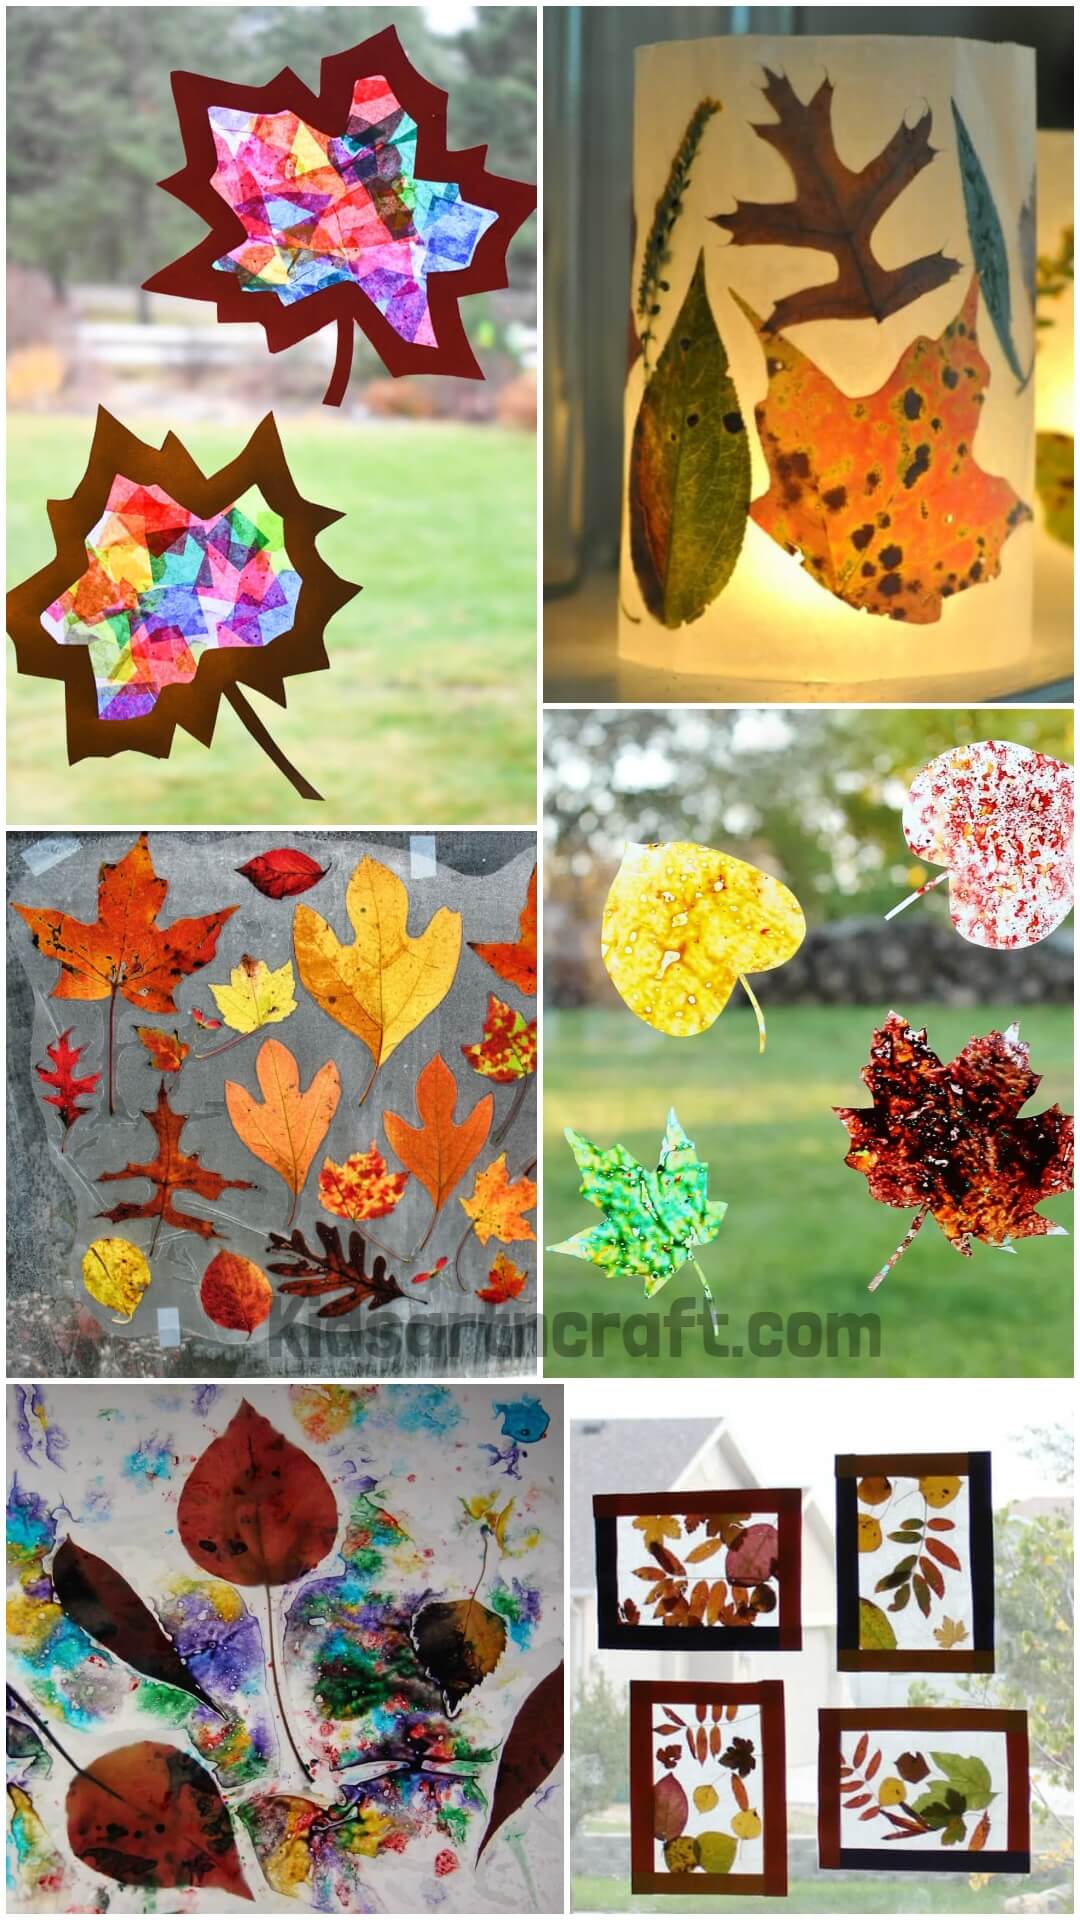 https://www.kidsartncraft.com/wp-content/uploads/2023/01/wax-paper-crafts-with-leaves-FS-Kidsartncraft-16.jpg